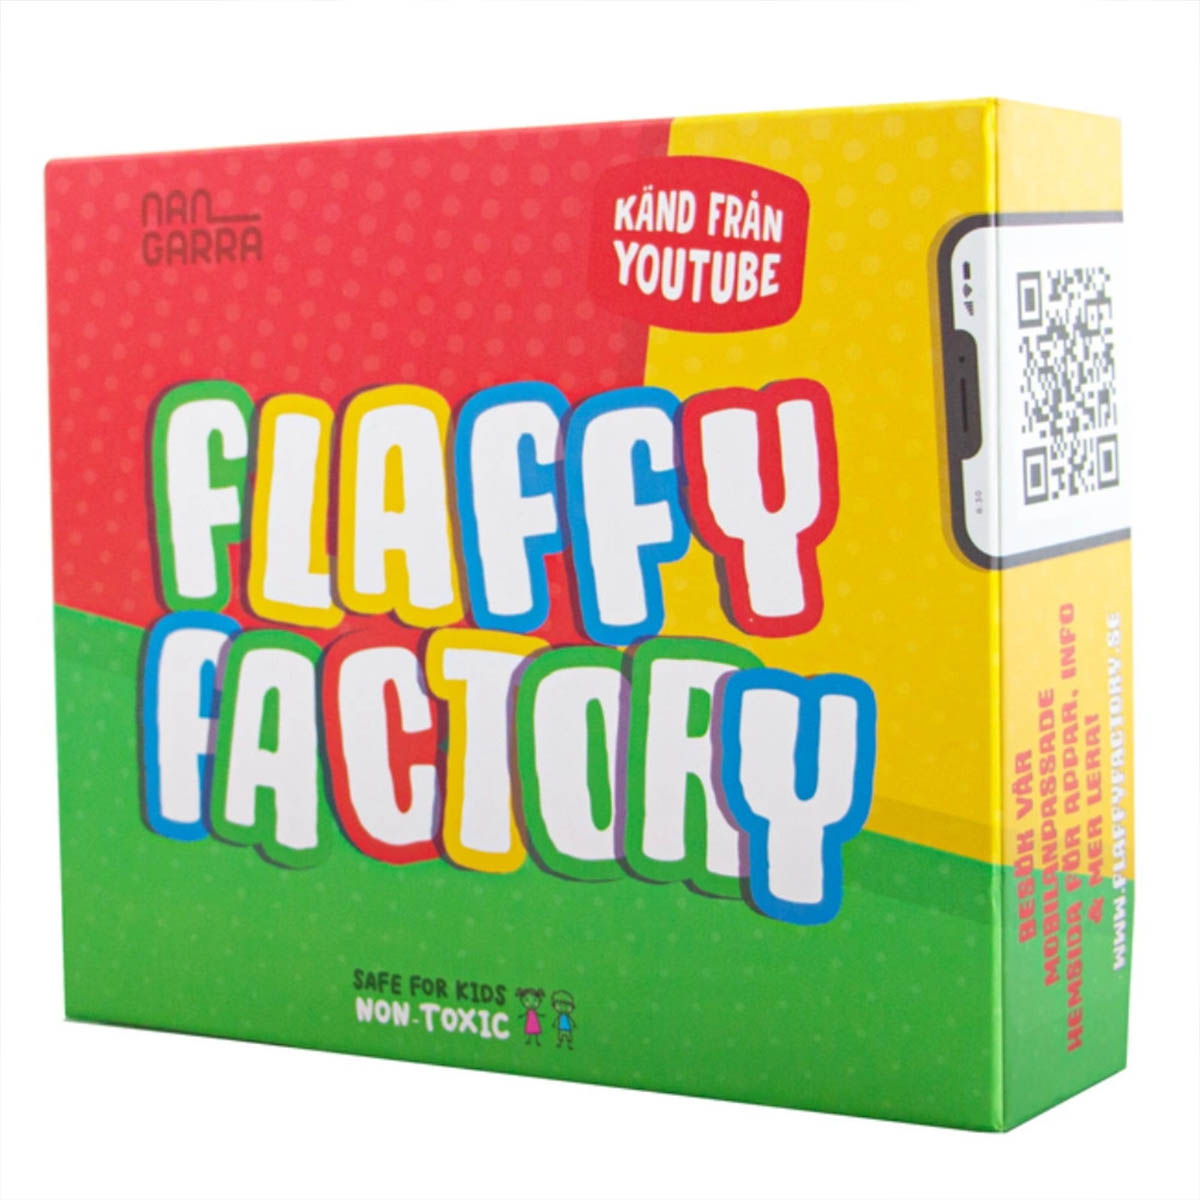 Spel Flaffy factory